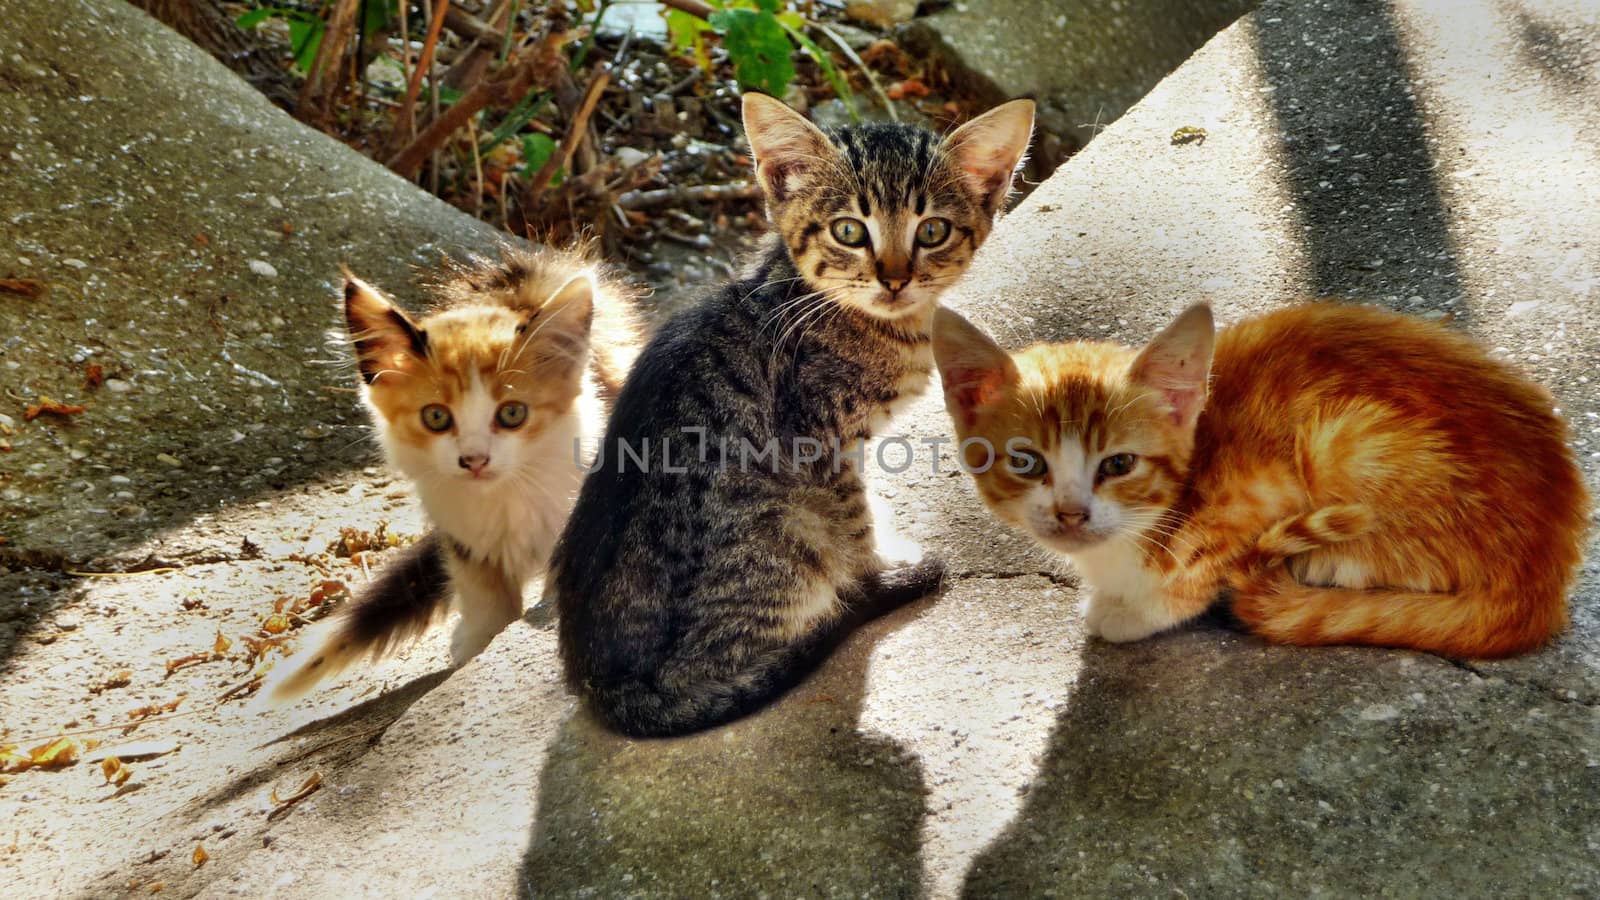 Kittens by samum